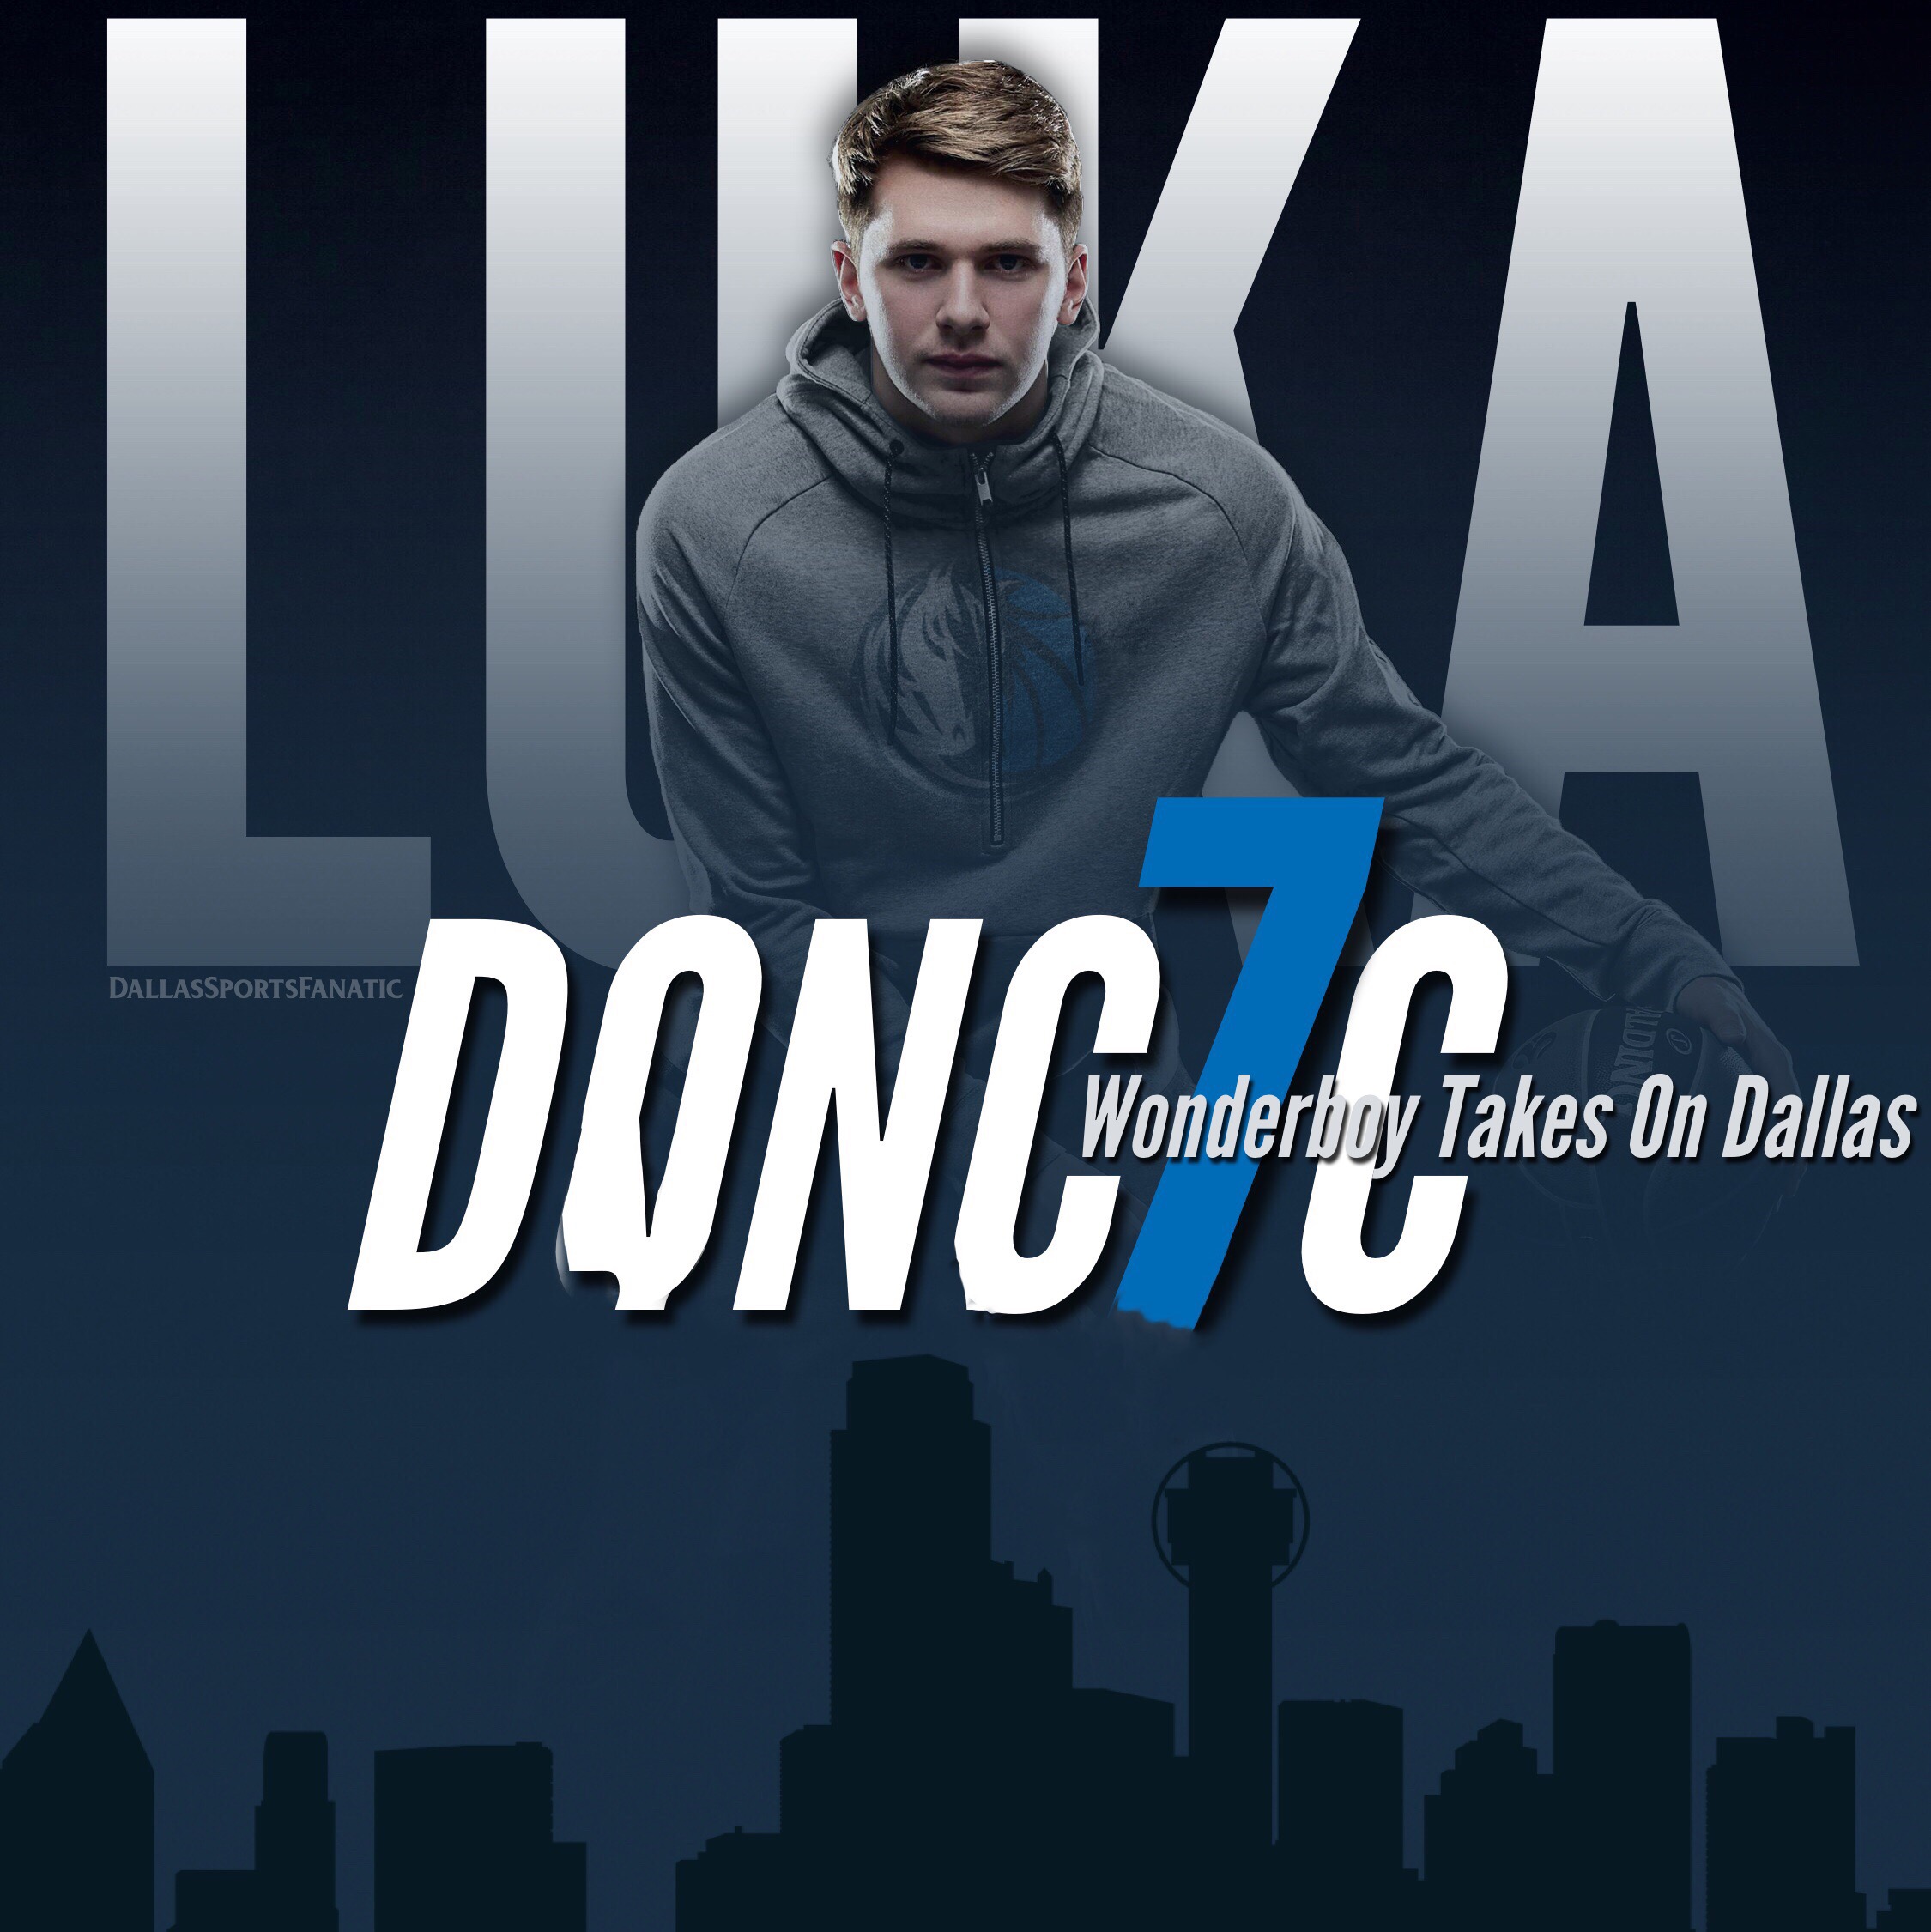 Mavs Hawks Swap Picks To Draft Luka Doncic Expected Start